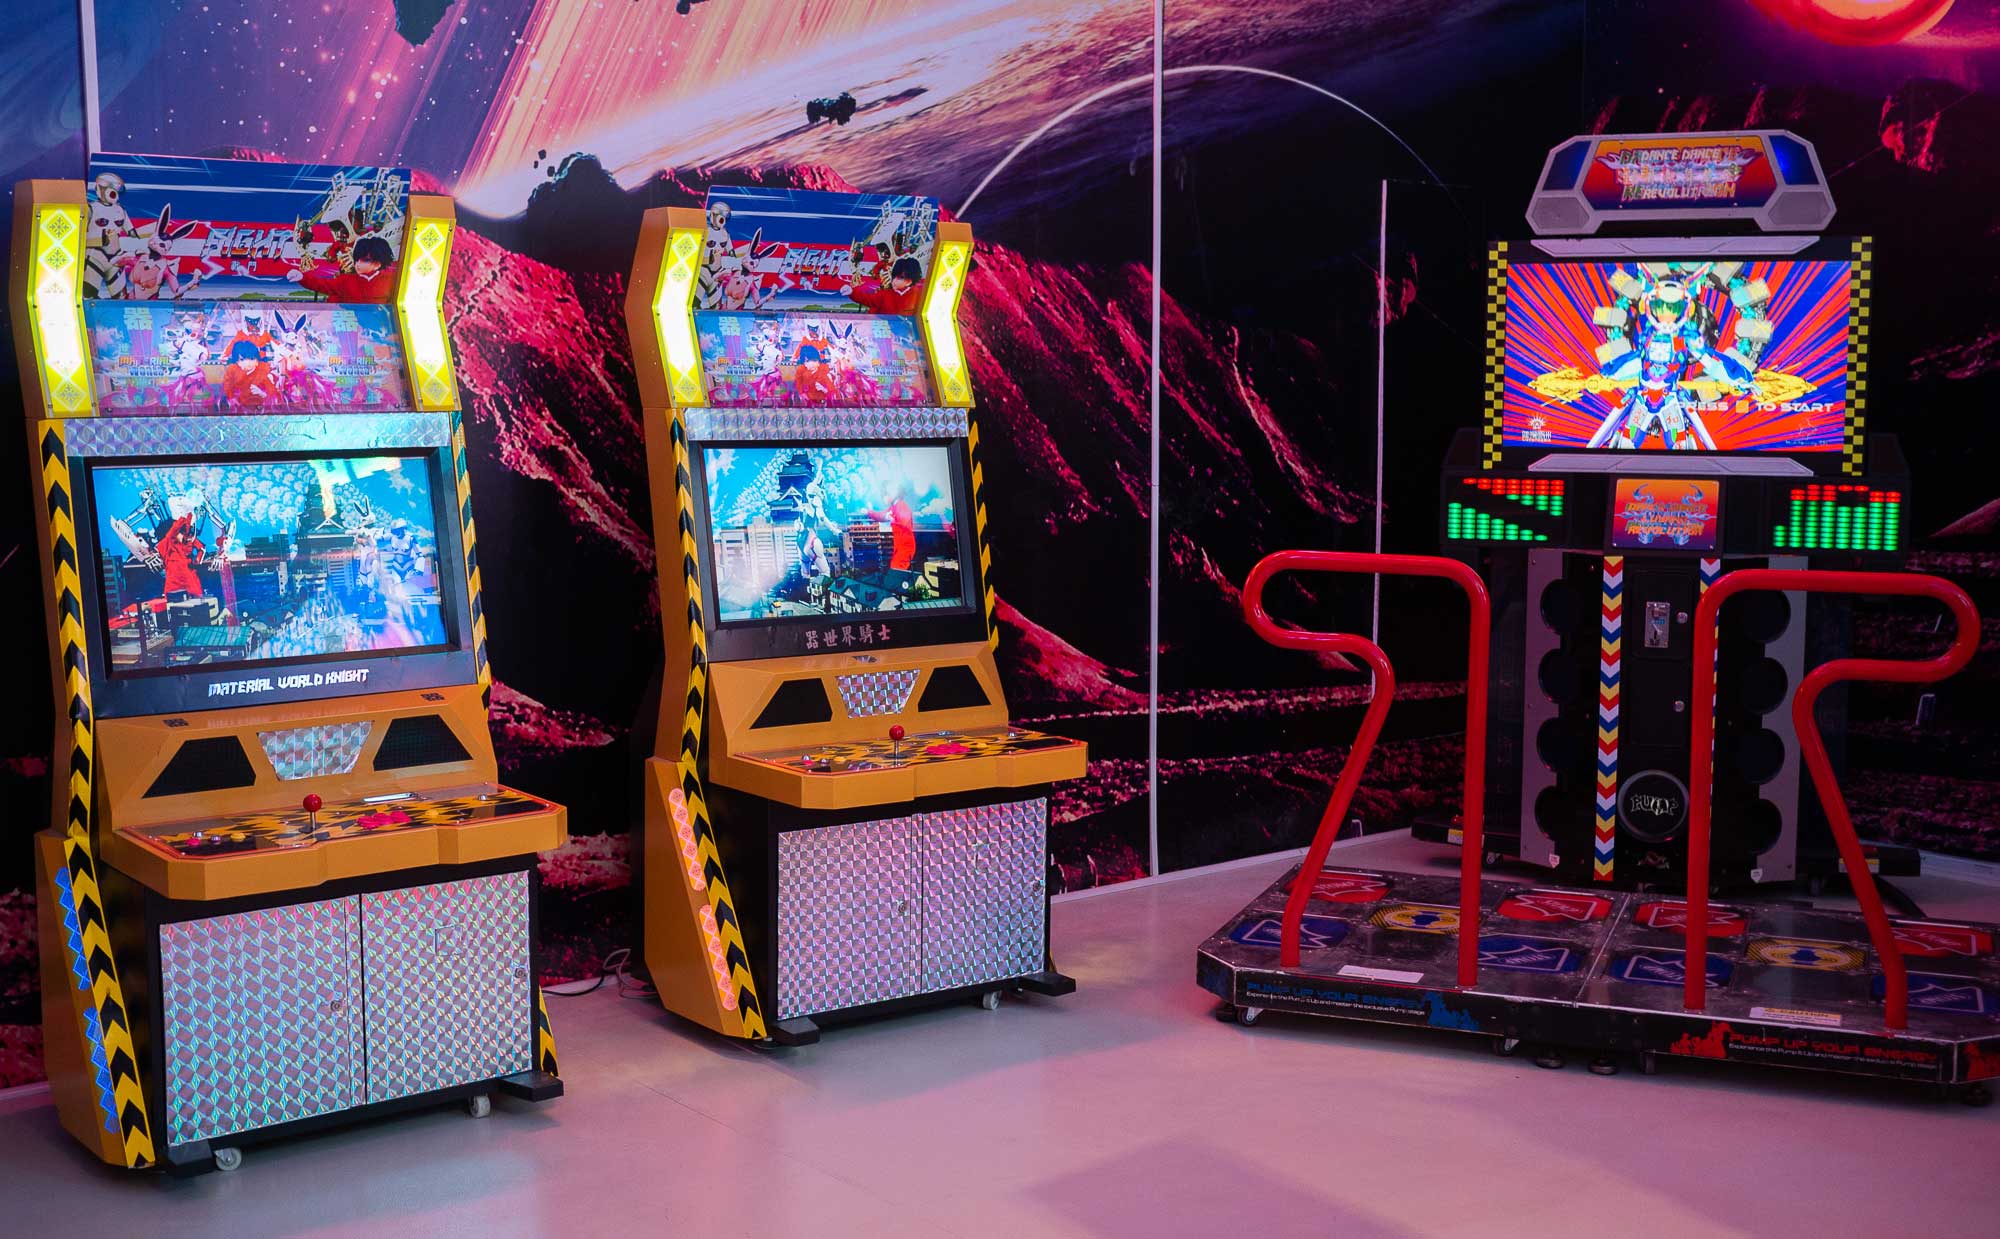 Photo of Lu Yang Dance Dance Revolution arcade machine installed at Power Station of Art